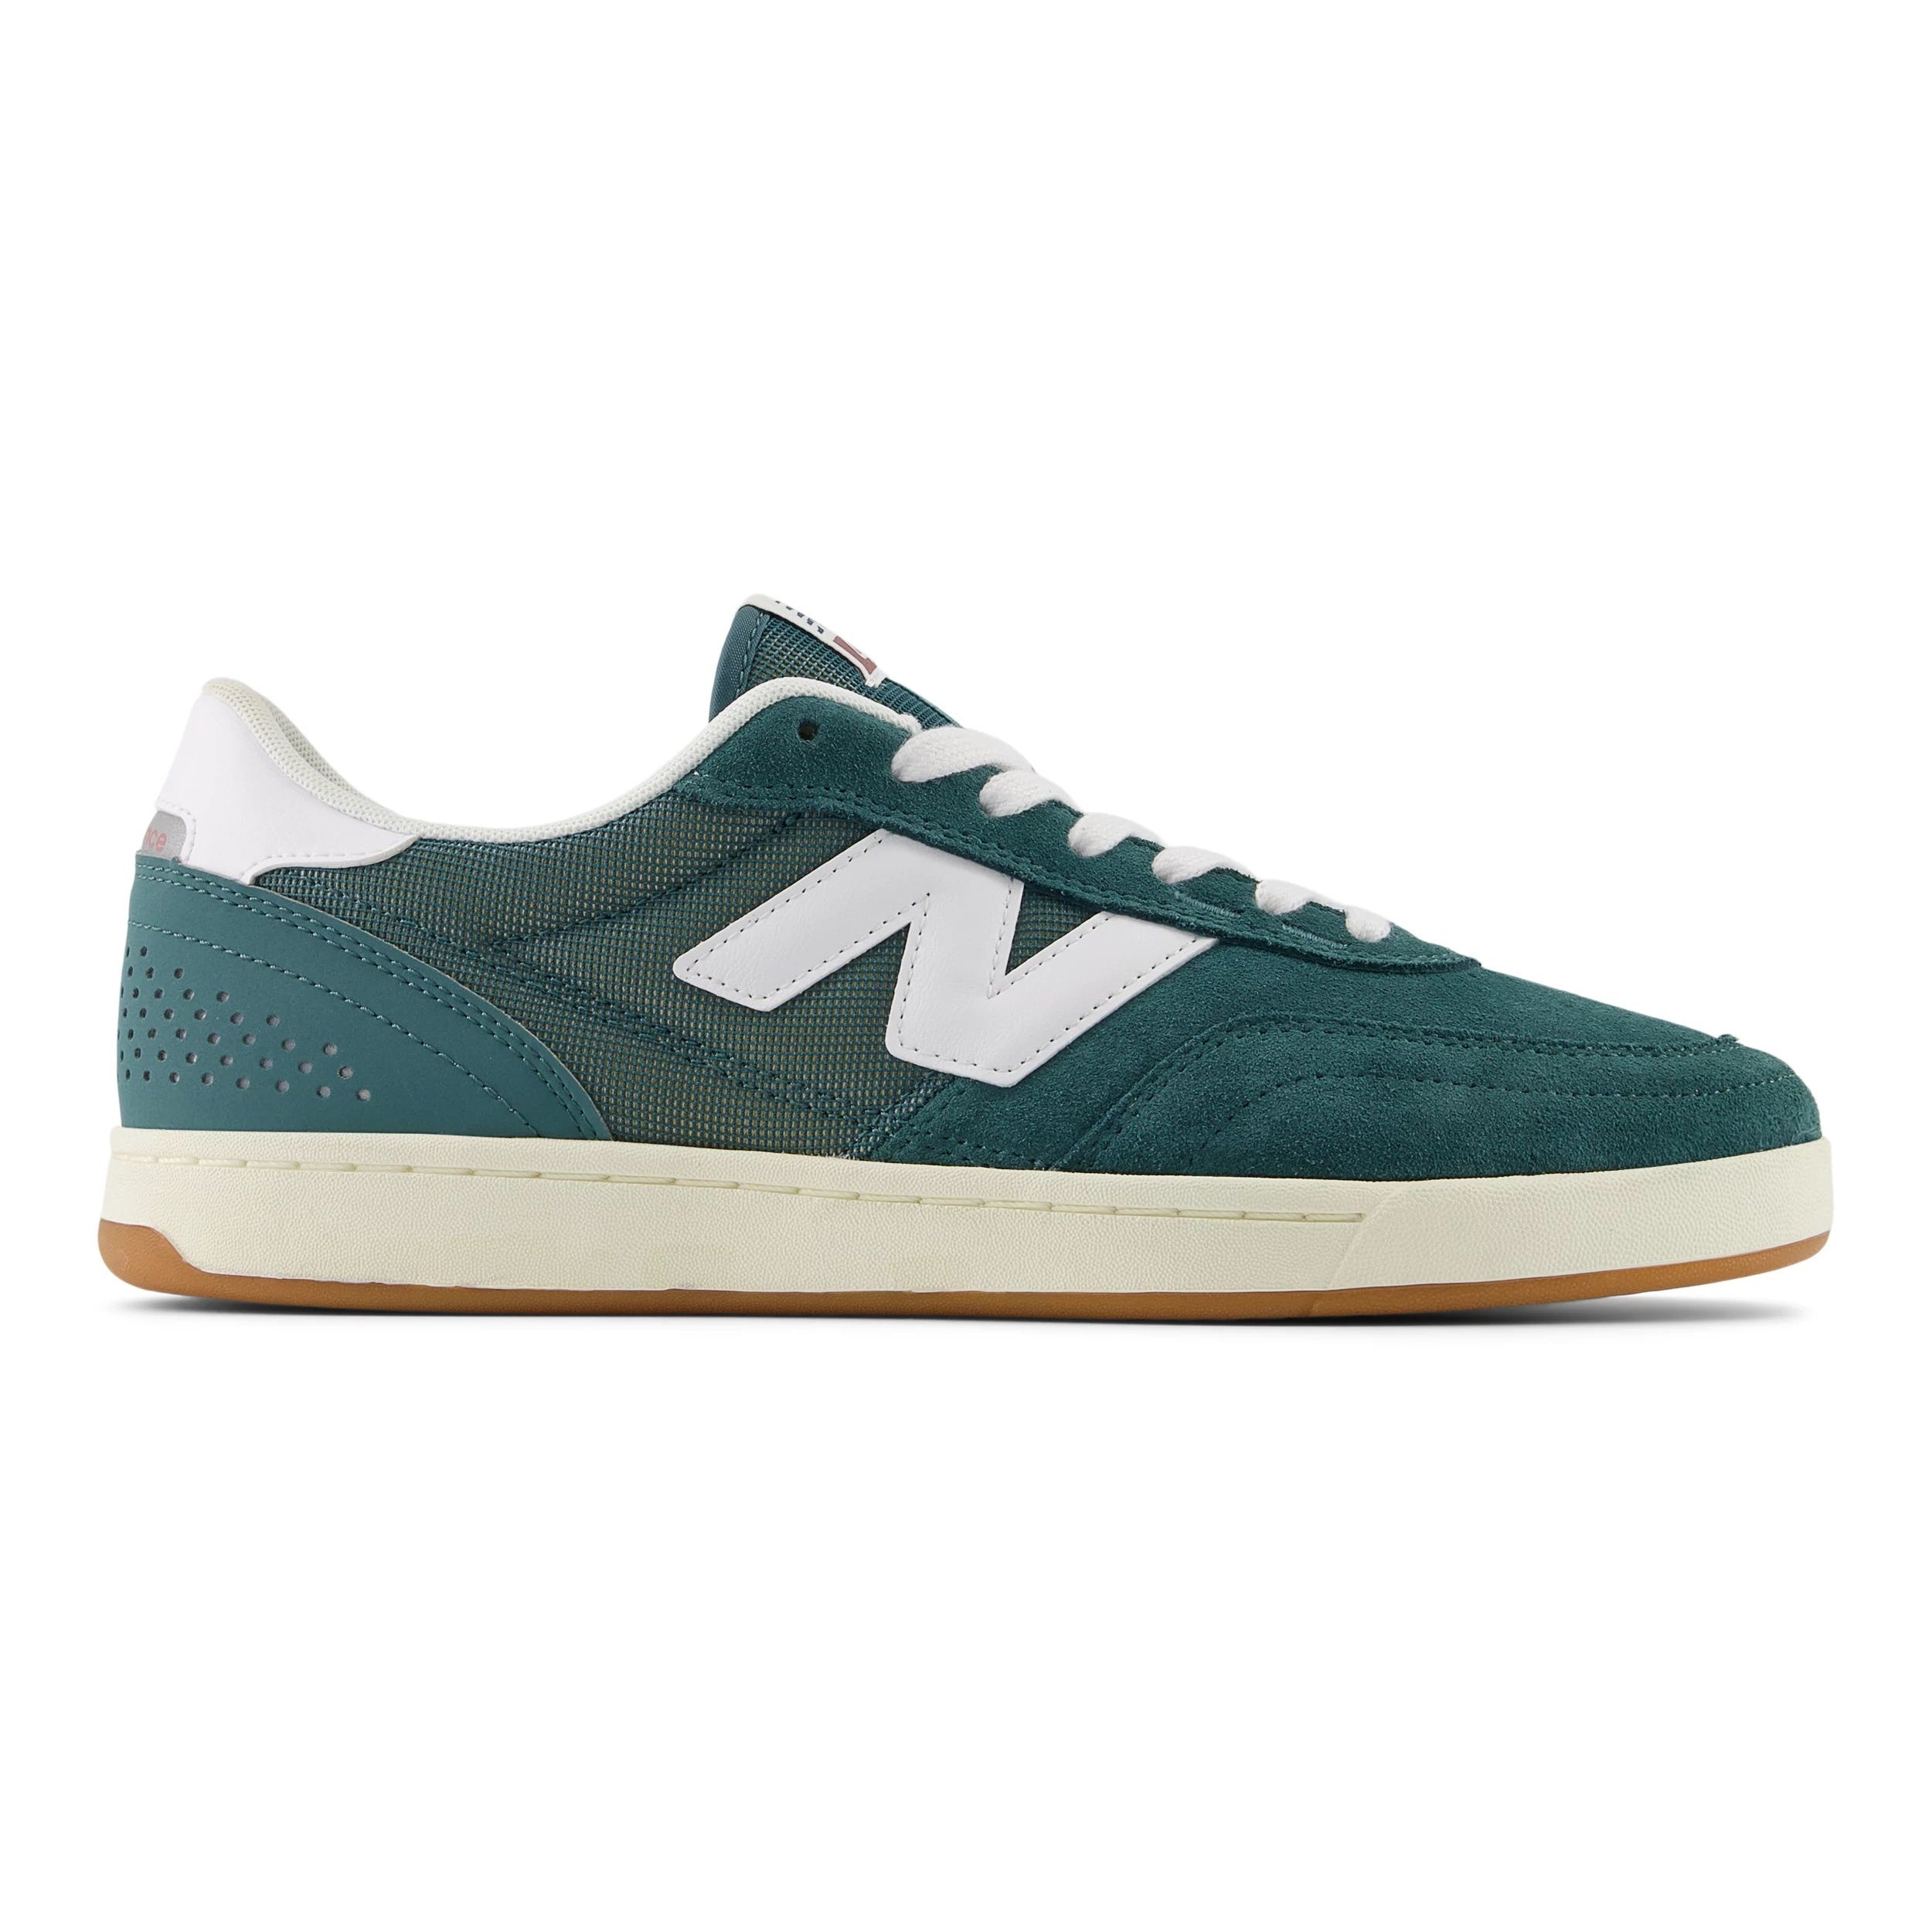 Spruce NM440v2 NB Numeric Skate Shoe